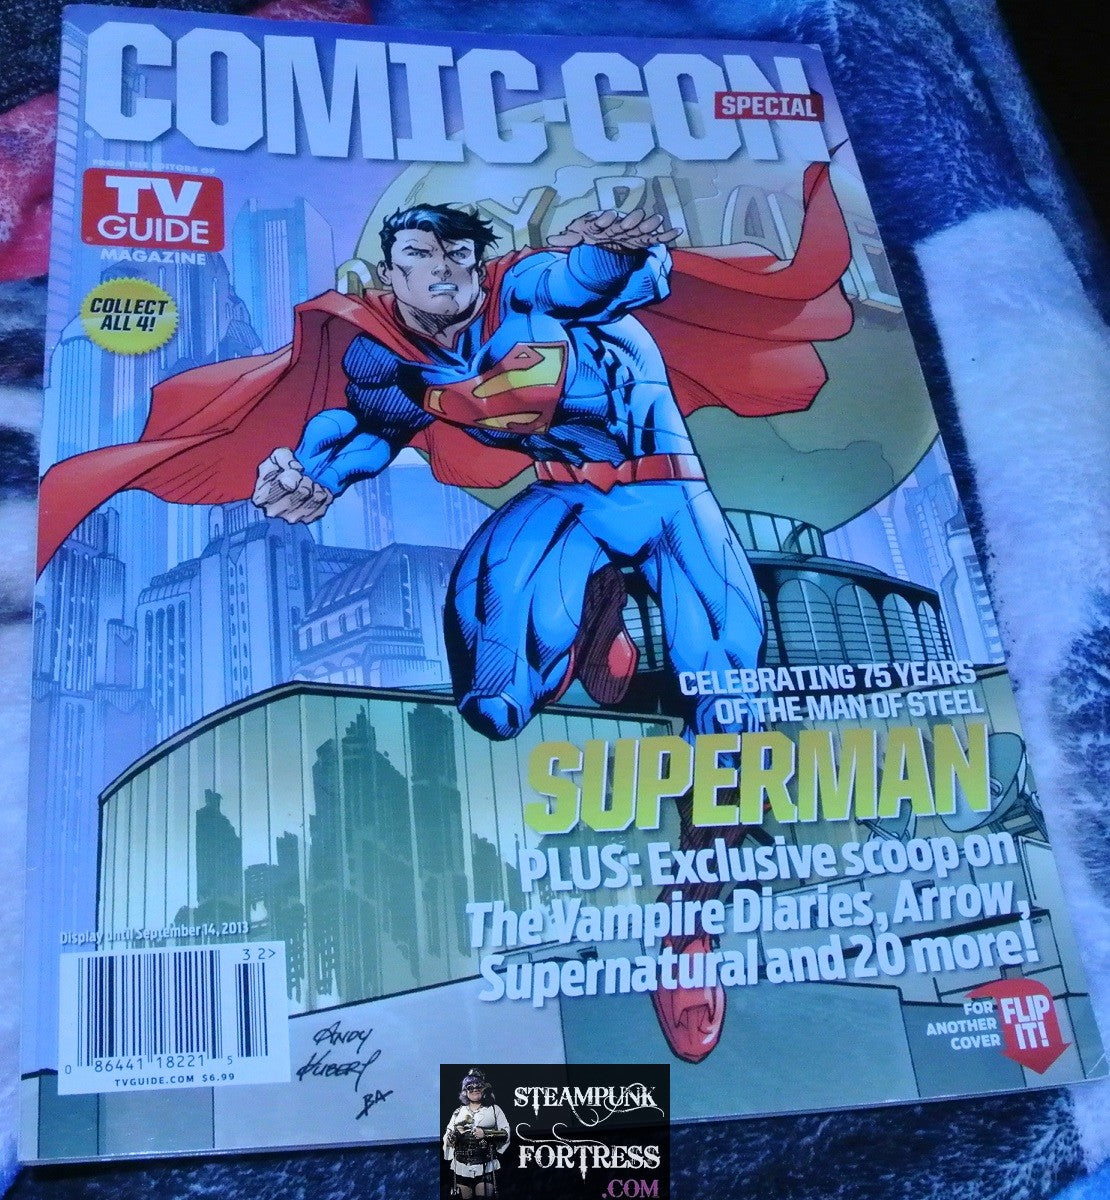 TV GUIDE 2013 BATMAN SUPERMAN DOUBLE COVER SDCC SAN DIEGO COMIC CON SPECIAL EDITION